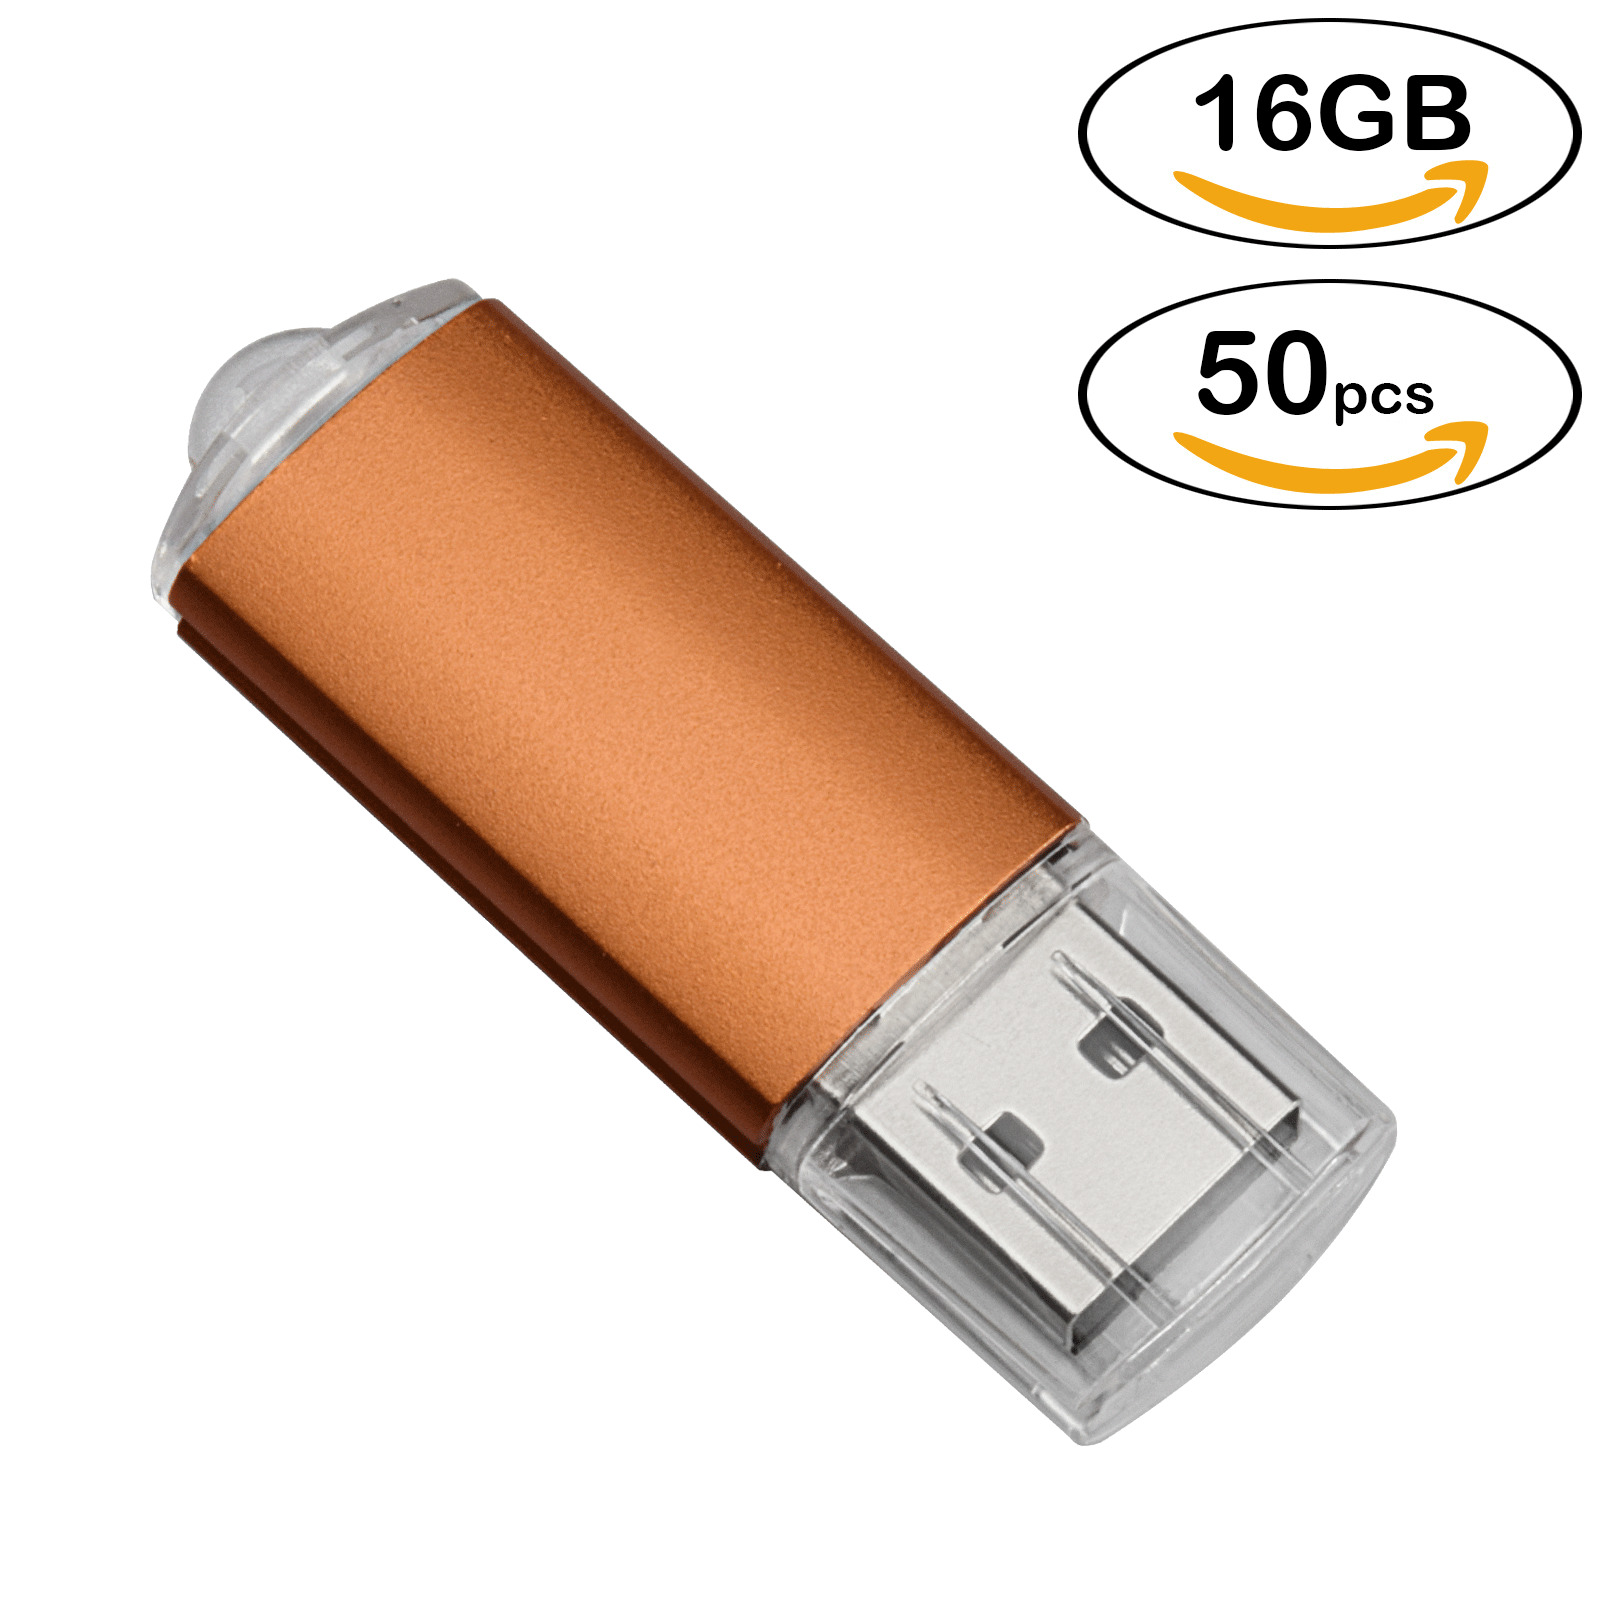 External Drive USB 2.0 50PCS Orange USB Flash Drives Memory Stick For PC Laptop 